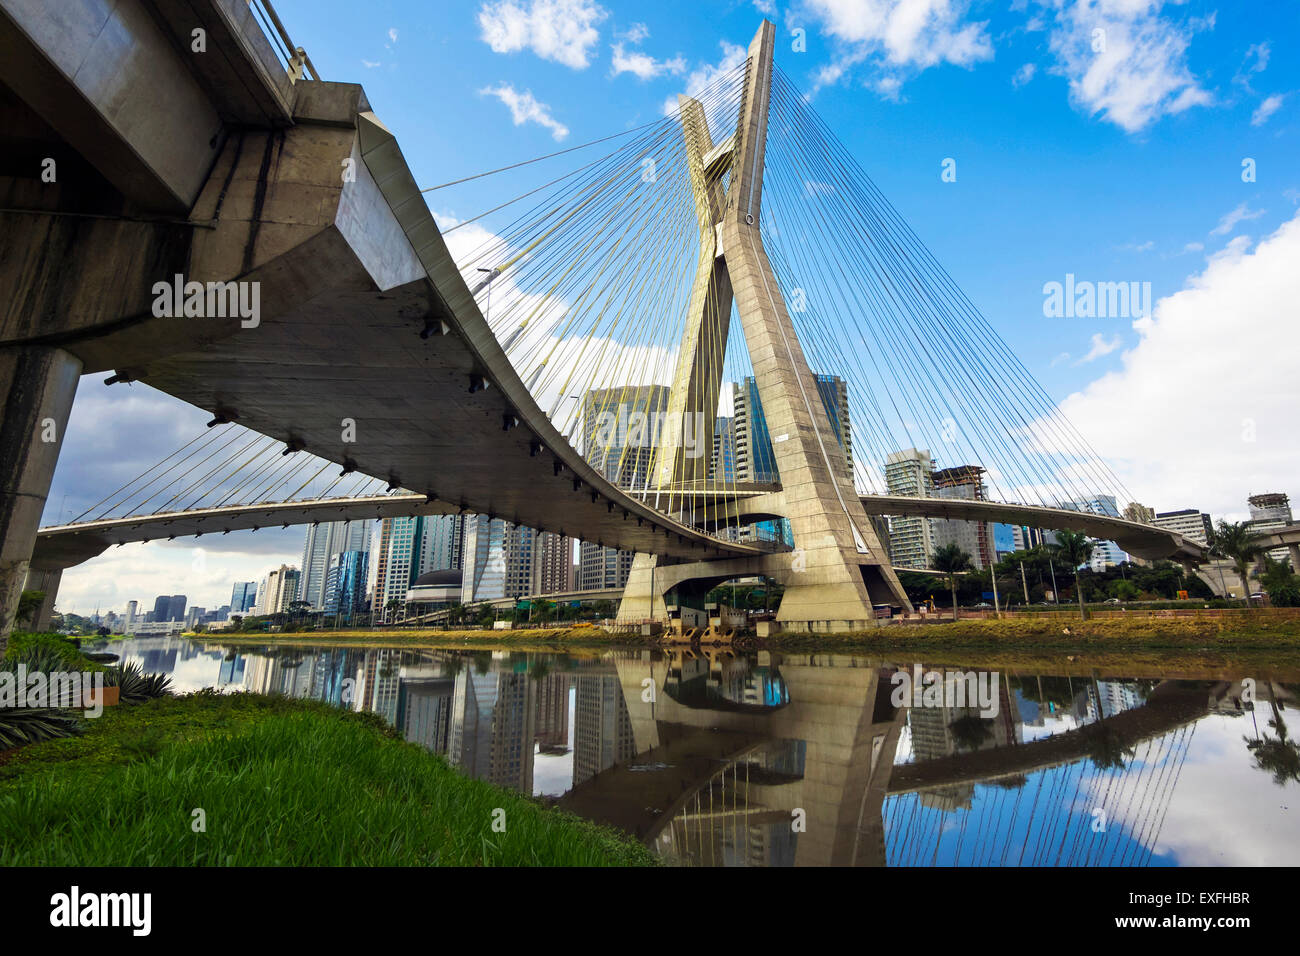 The Octavio Frias de Oliveira Bridge, or Ponte Estaiada, in Sao Paulo, Brazil. Stock Photo